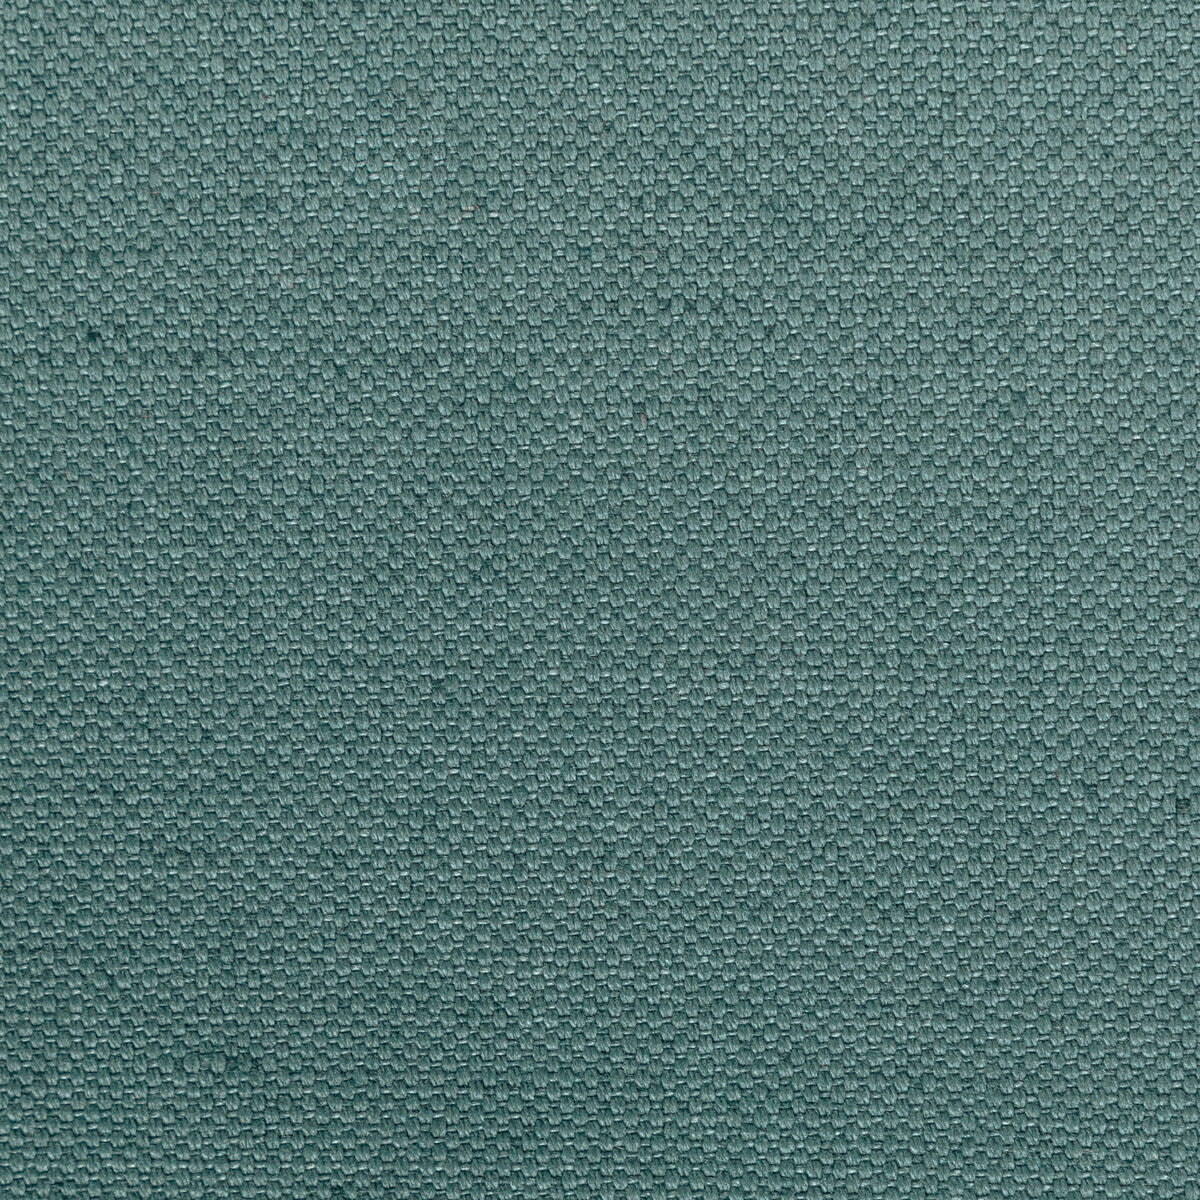 Carson fabric in thunder color - pattern 36282.521.0 - by Kravet Basics